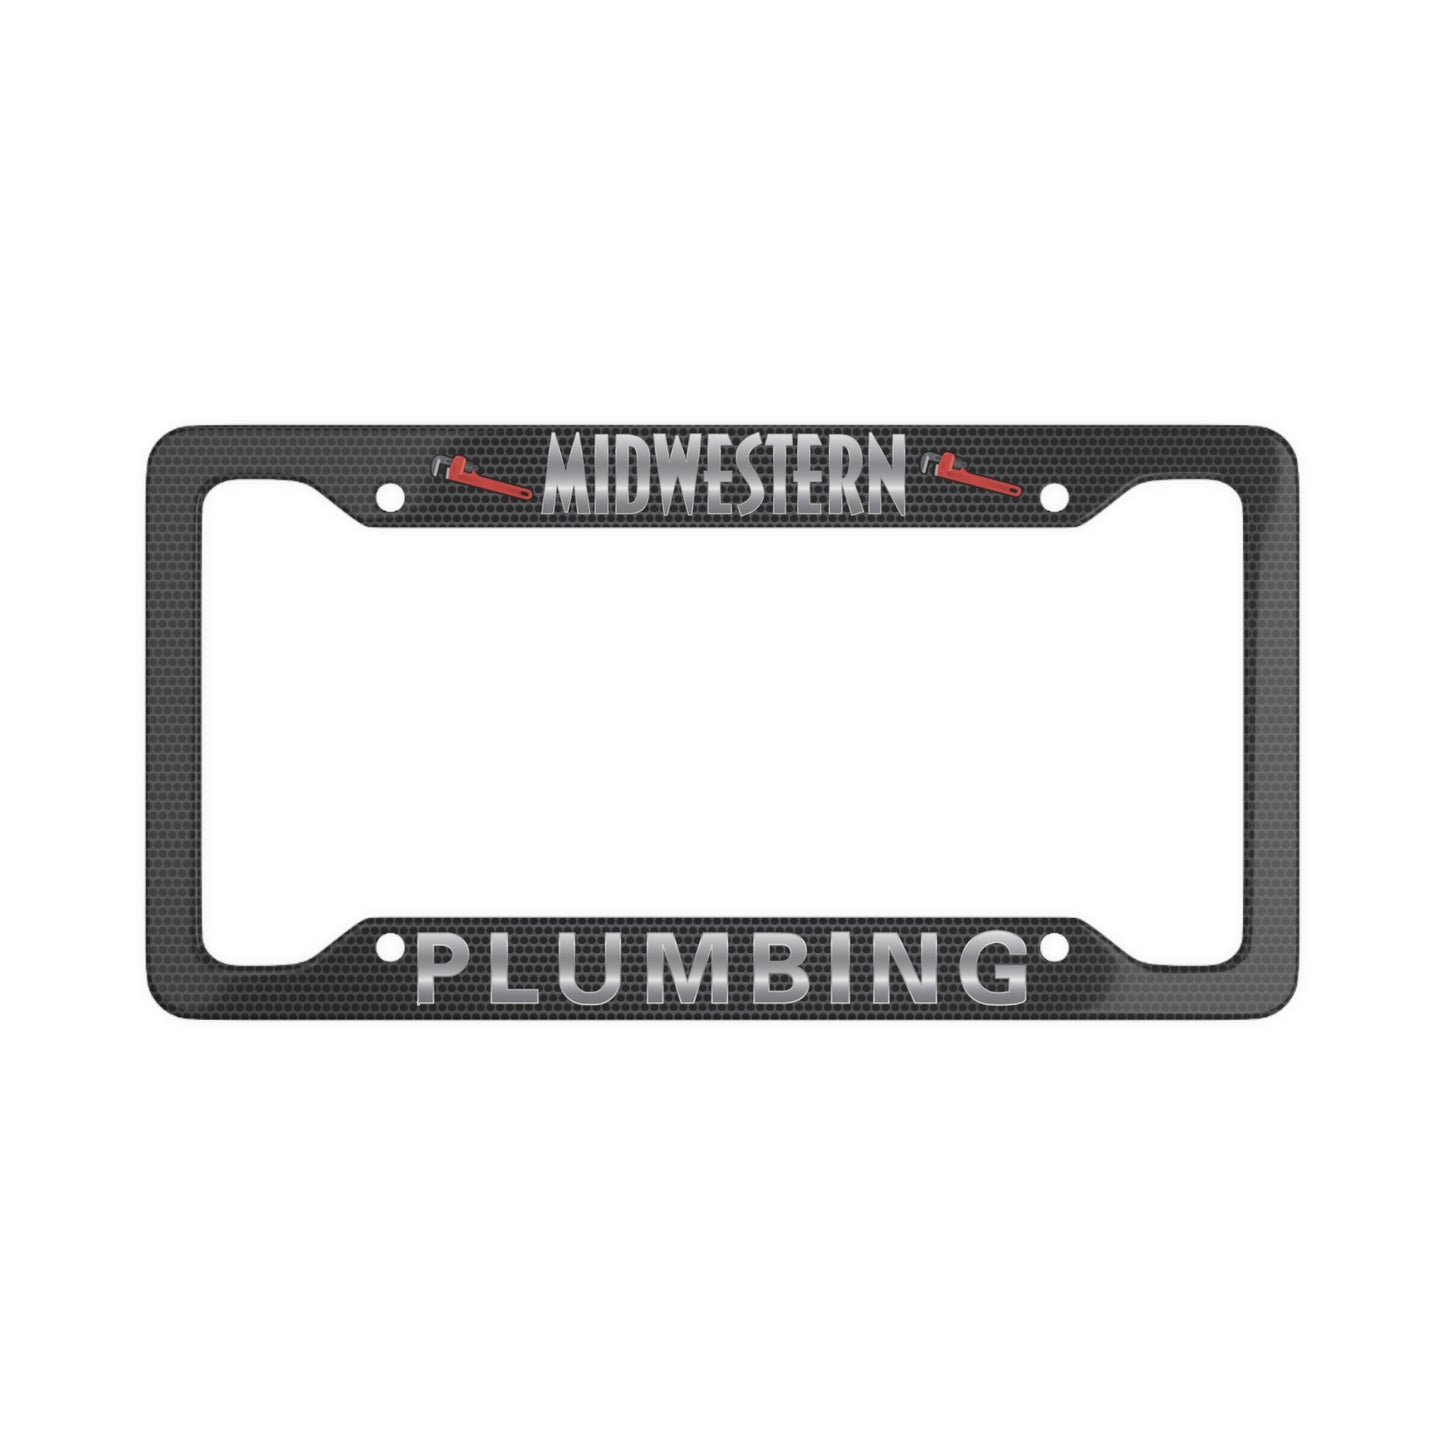 Midwestern Plumbing Black License Plate Frame